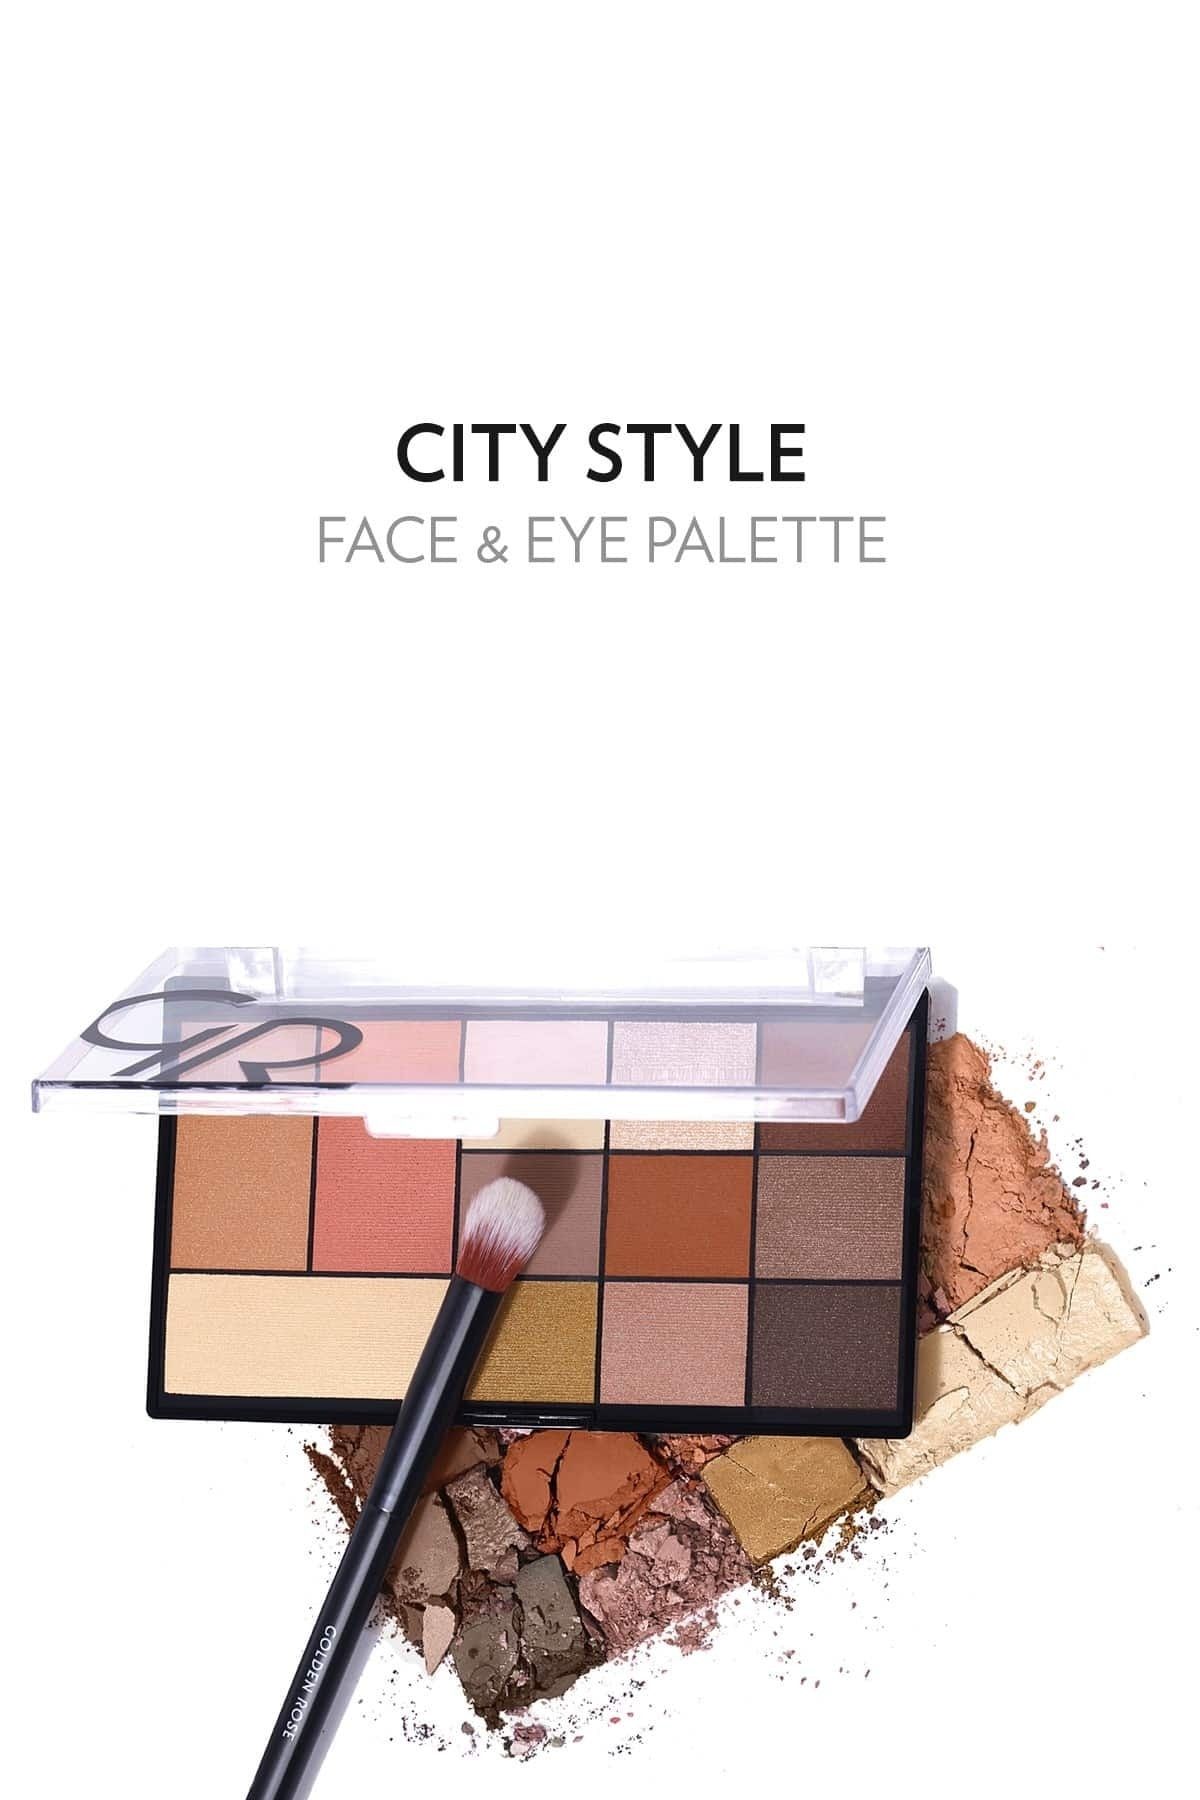 Golden Rose Yüz Göz Paleti City Style Face Eye Palette No: 01 Warm Nude Trendgr